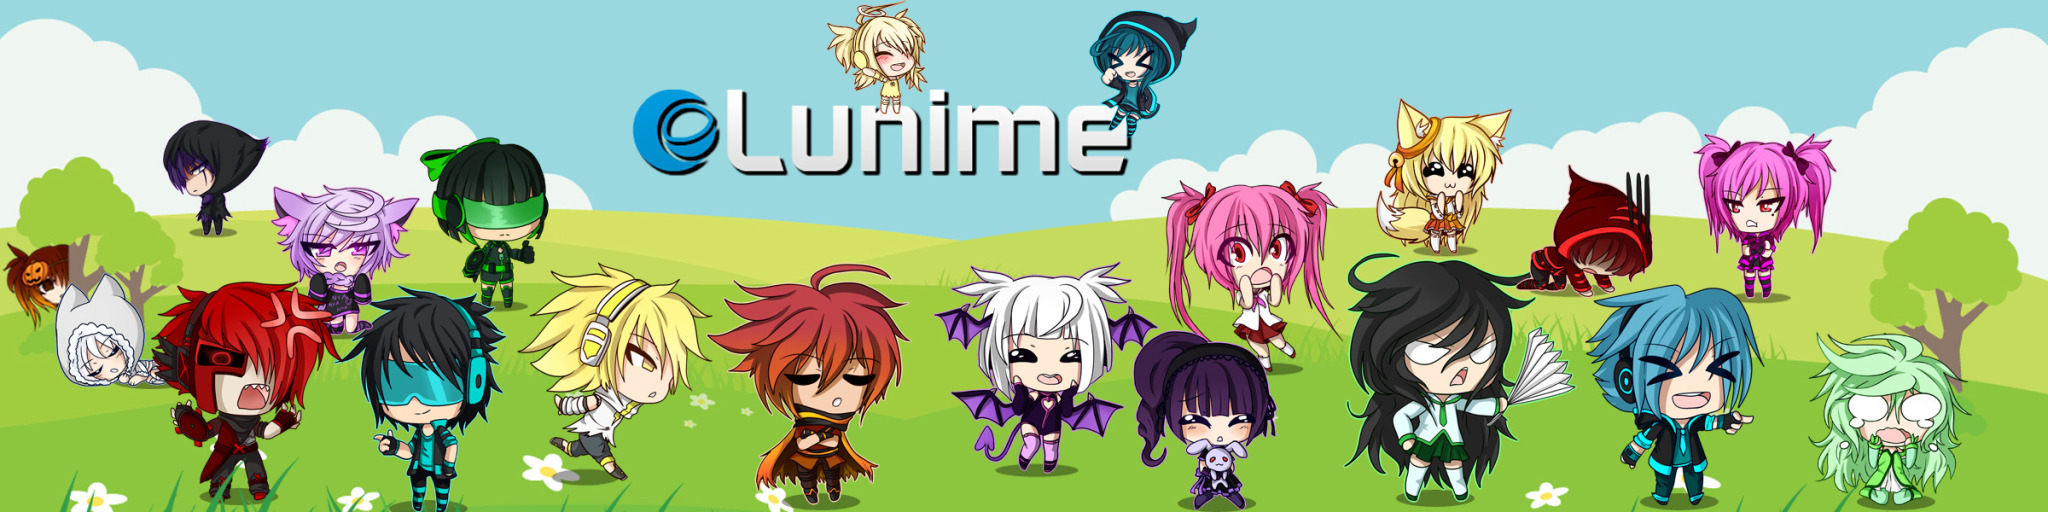 Anime Flap on Windows PC Download Free - 1.1 - air.com.lunime.flappyanime